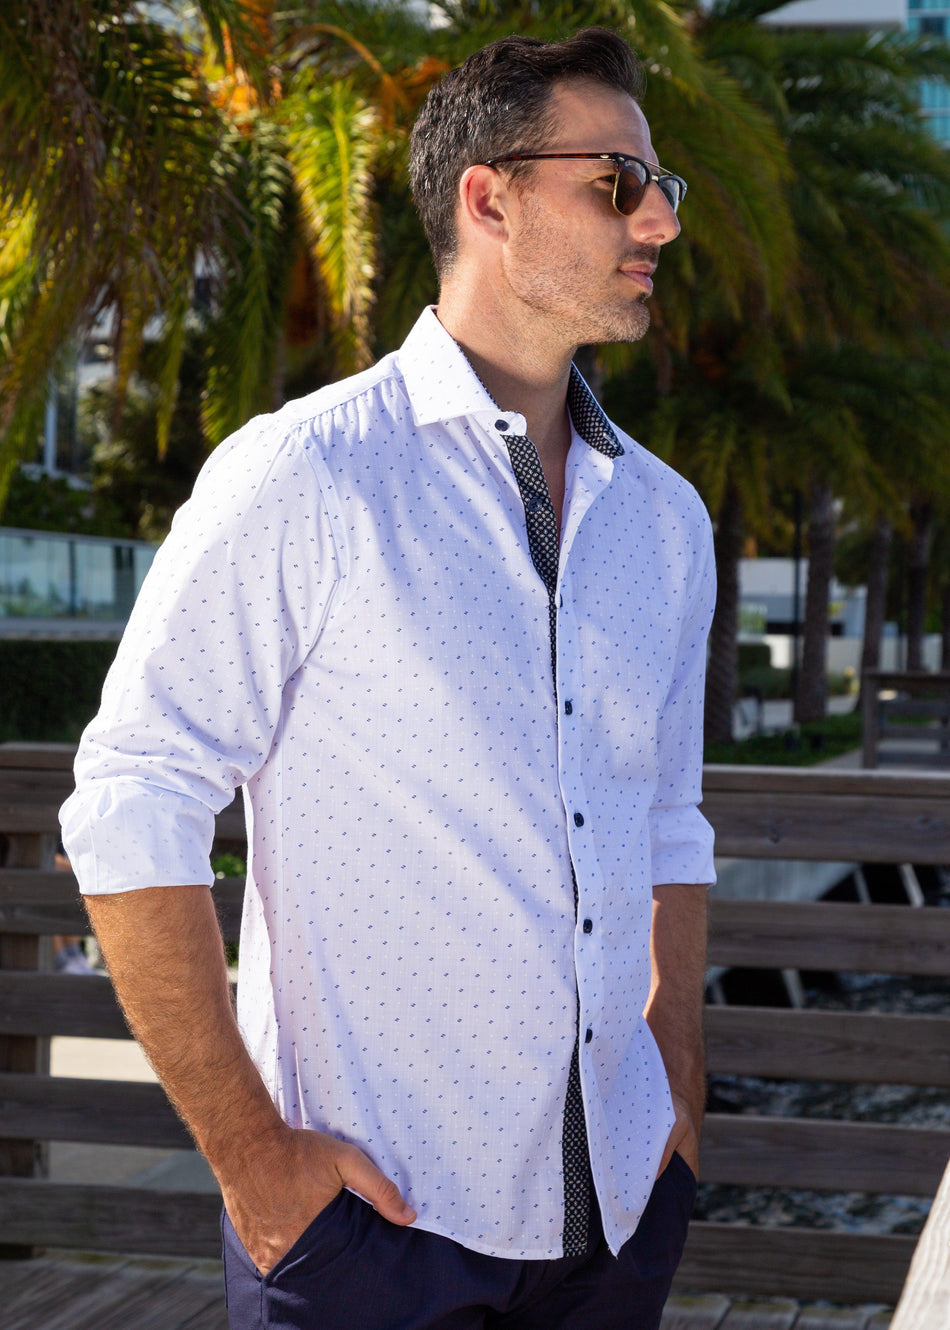 Stitched Pattern Linen Texture White Button Up Long Sleeve Dress Shirt